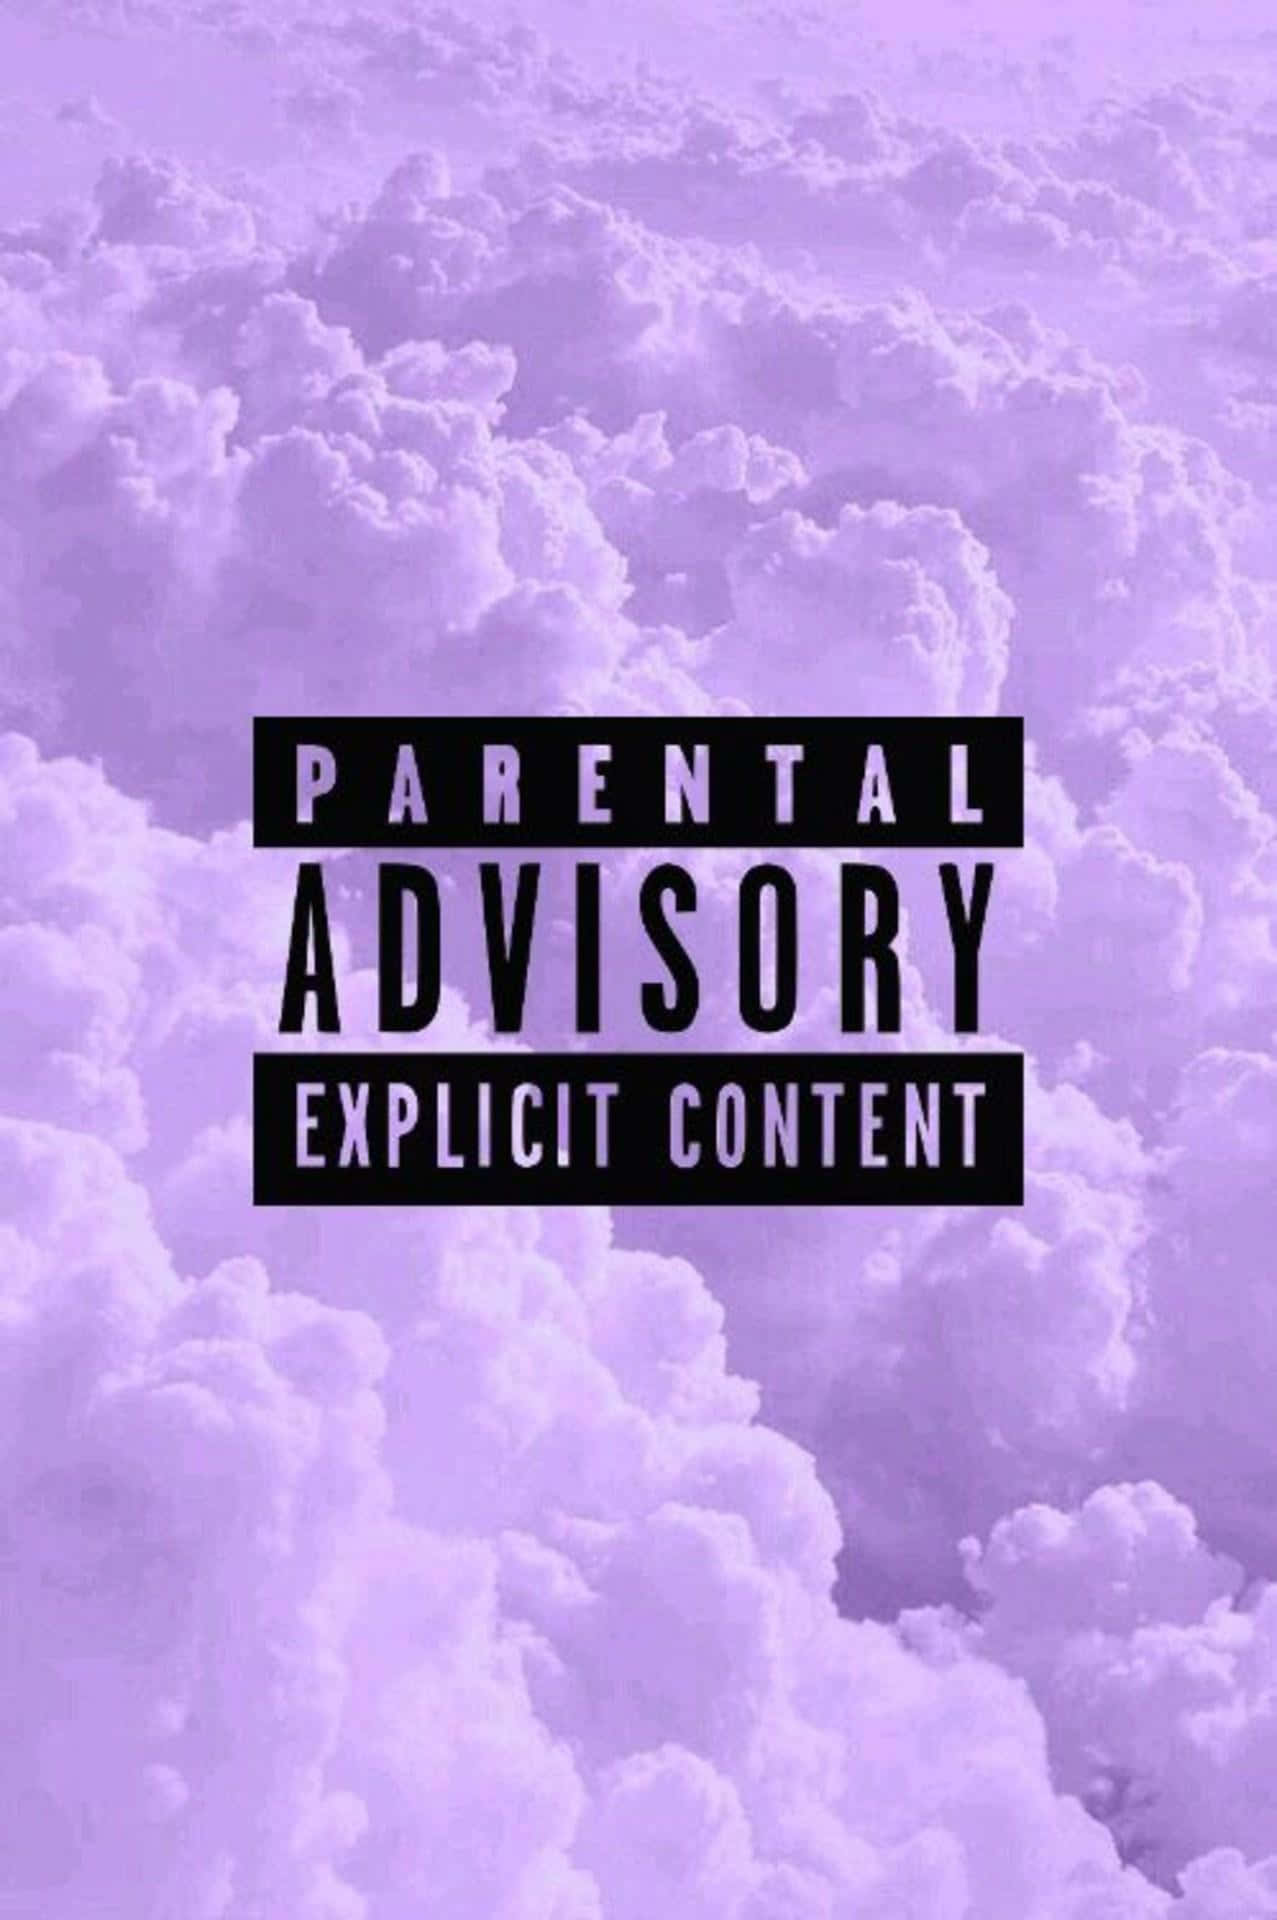 parental advisory explicit content wallpaper